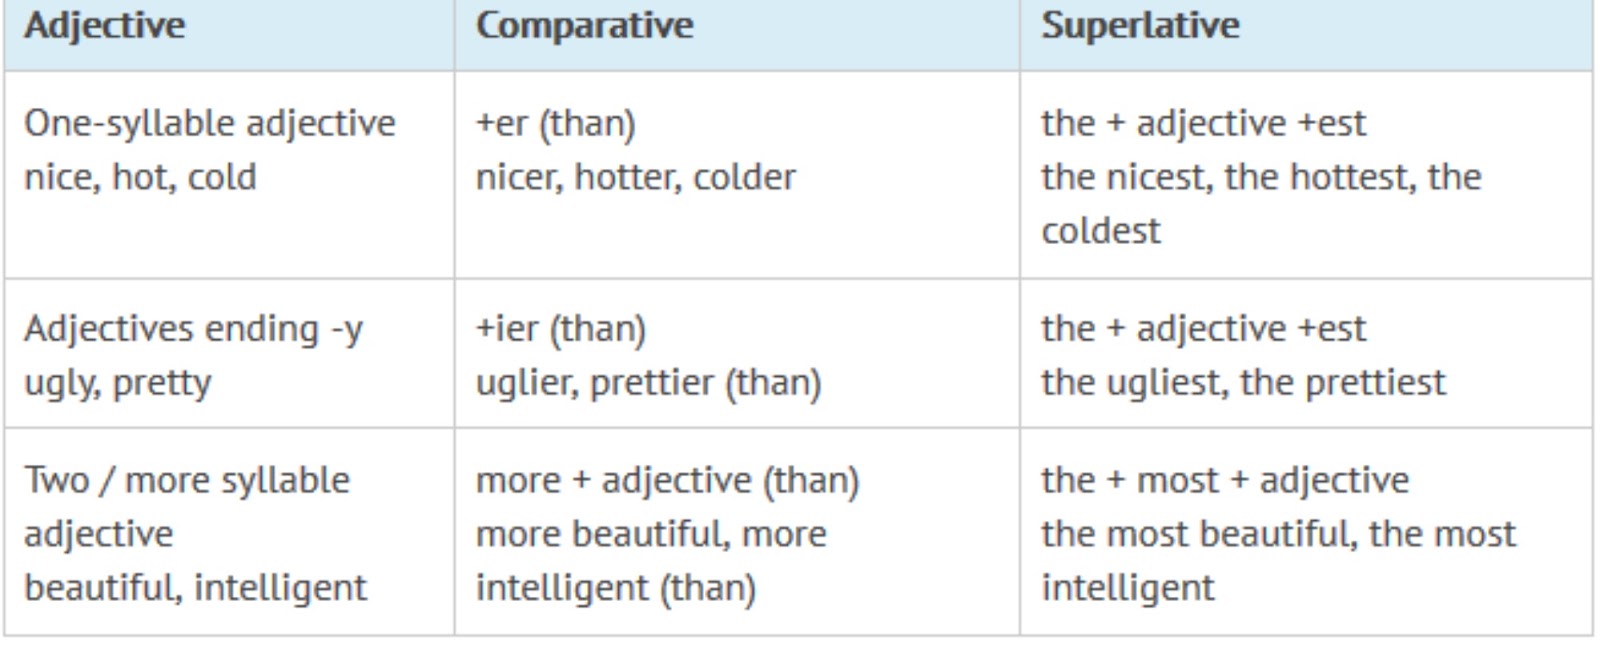 Adjective comparative superlative talented. Comparatives and Superlatives. Comparative and Superlative adjectives исключения. Грамматика Comparatives. Comparatives and Superlatives исключения.